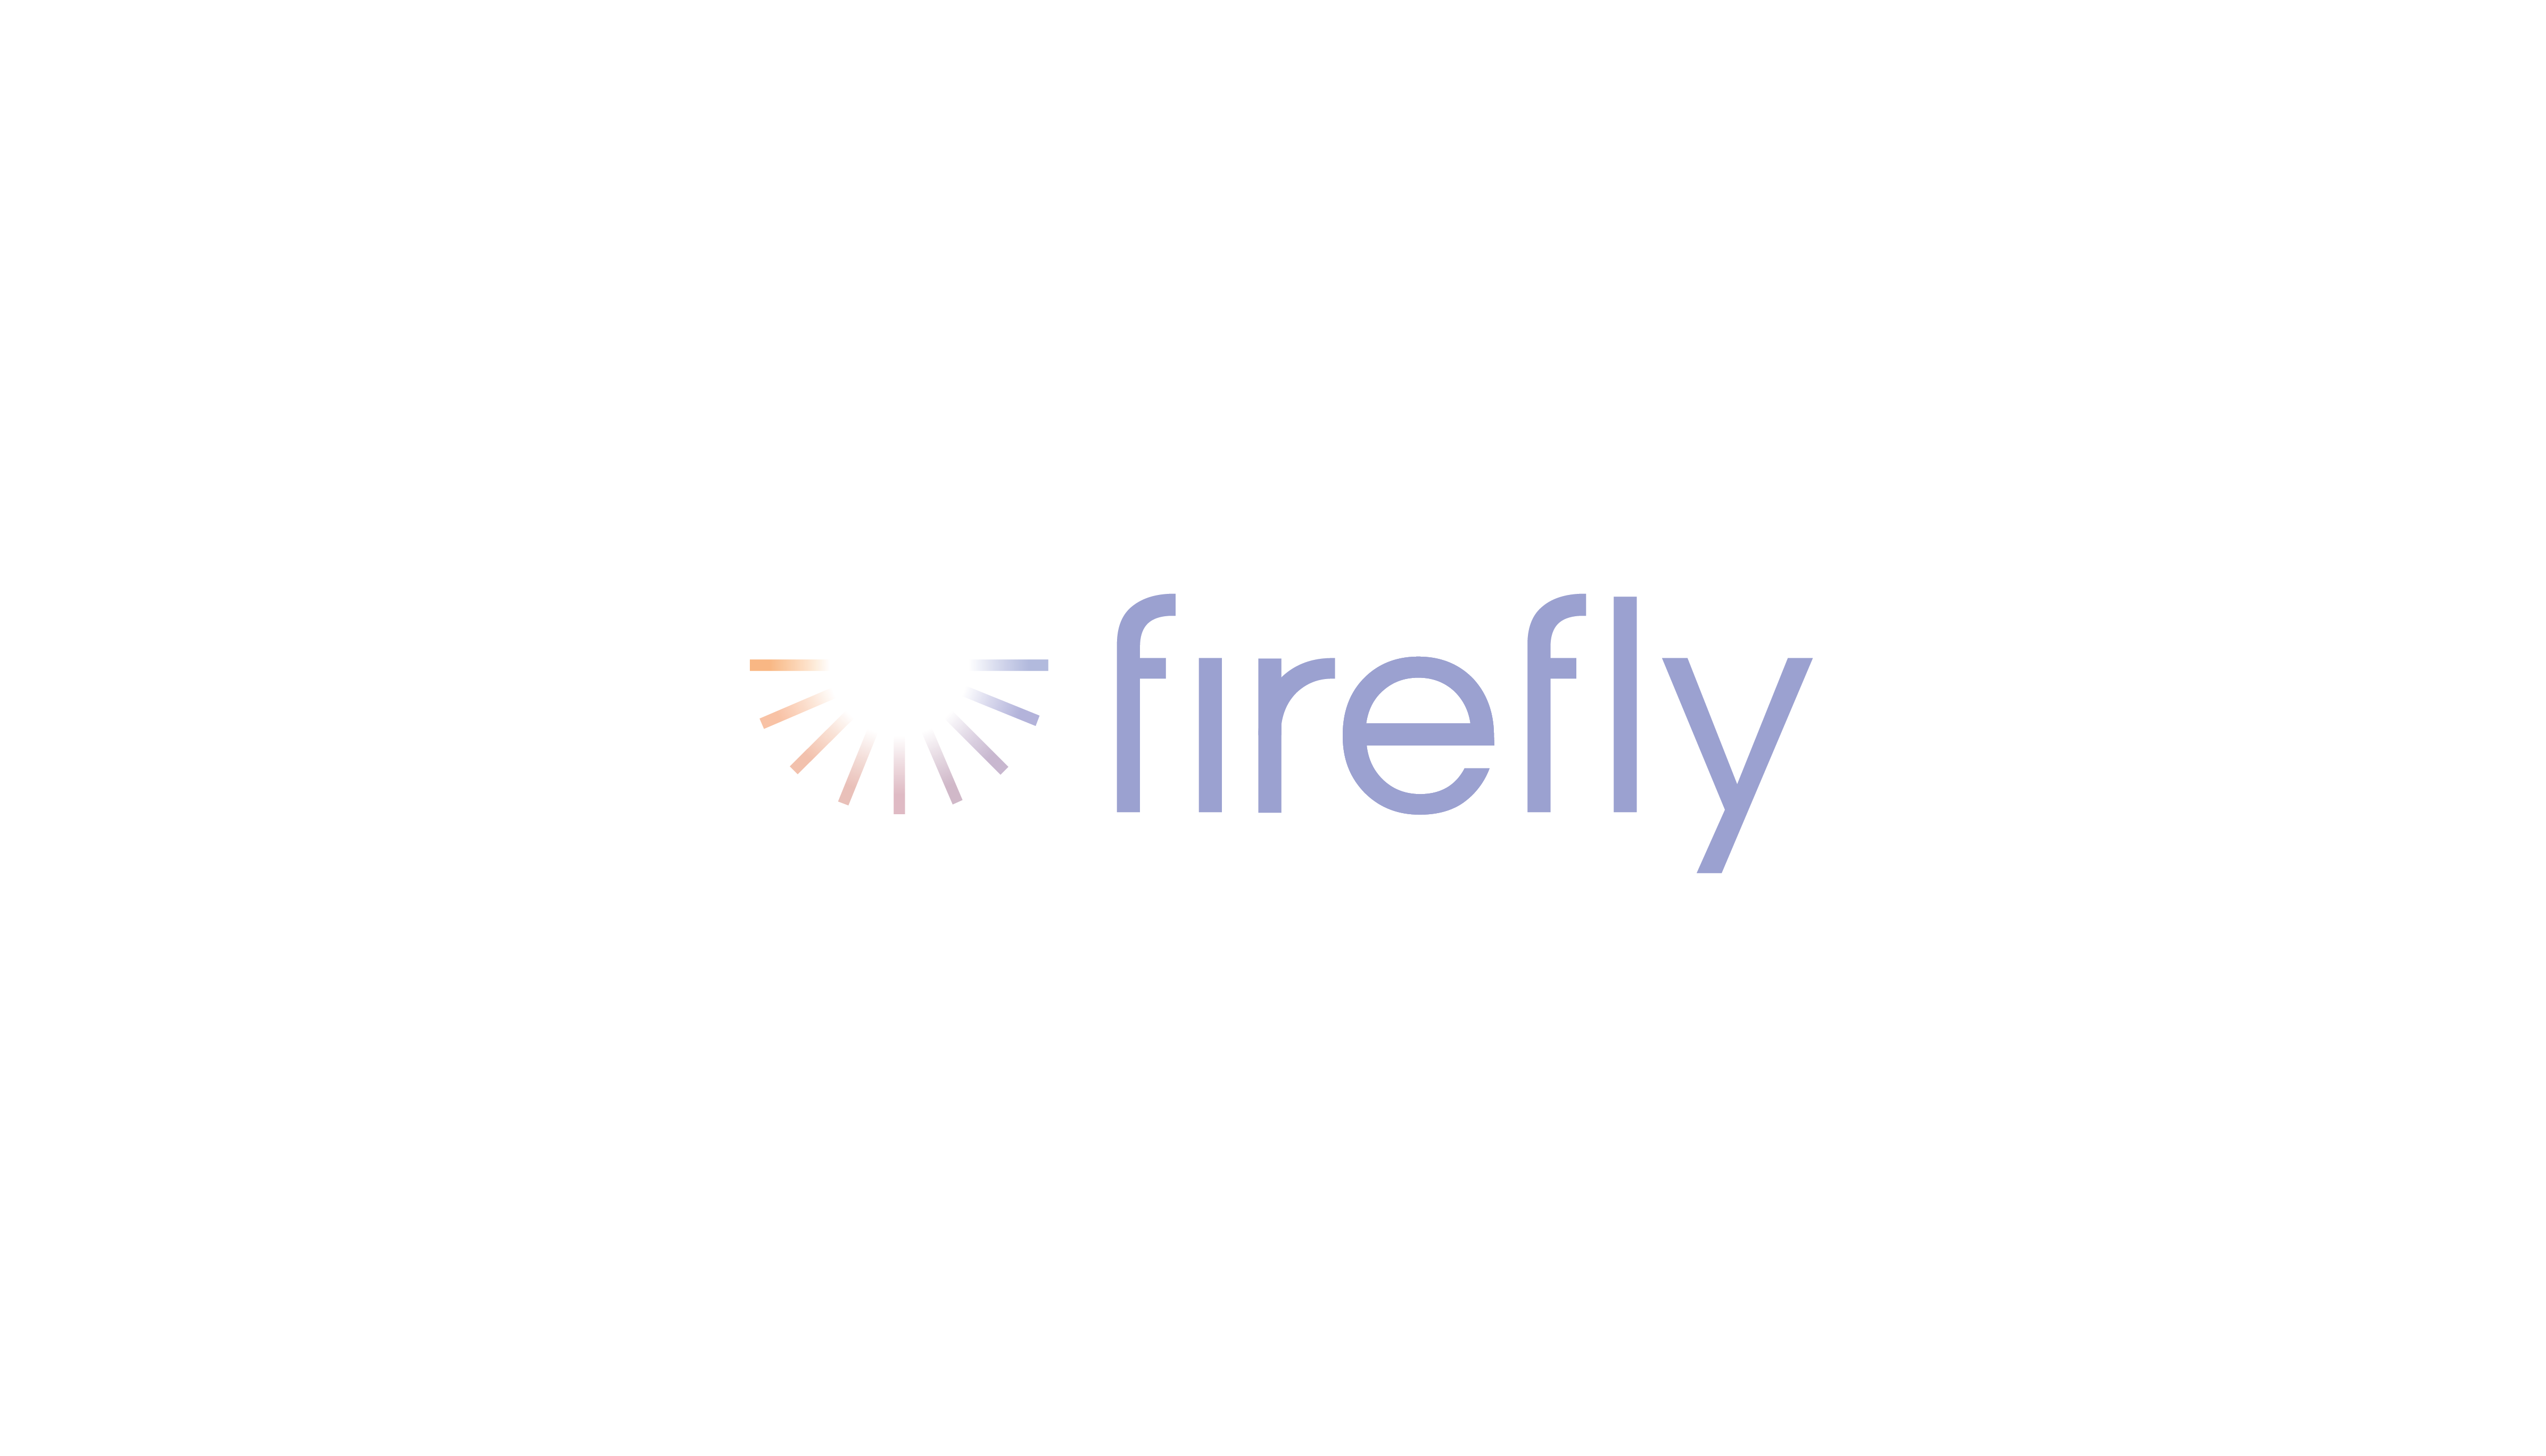 Firefly logo - achtergrond wit